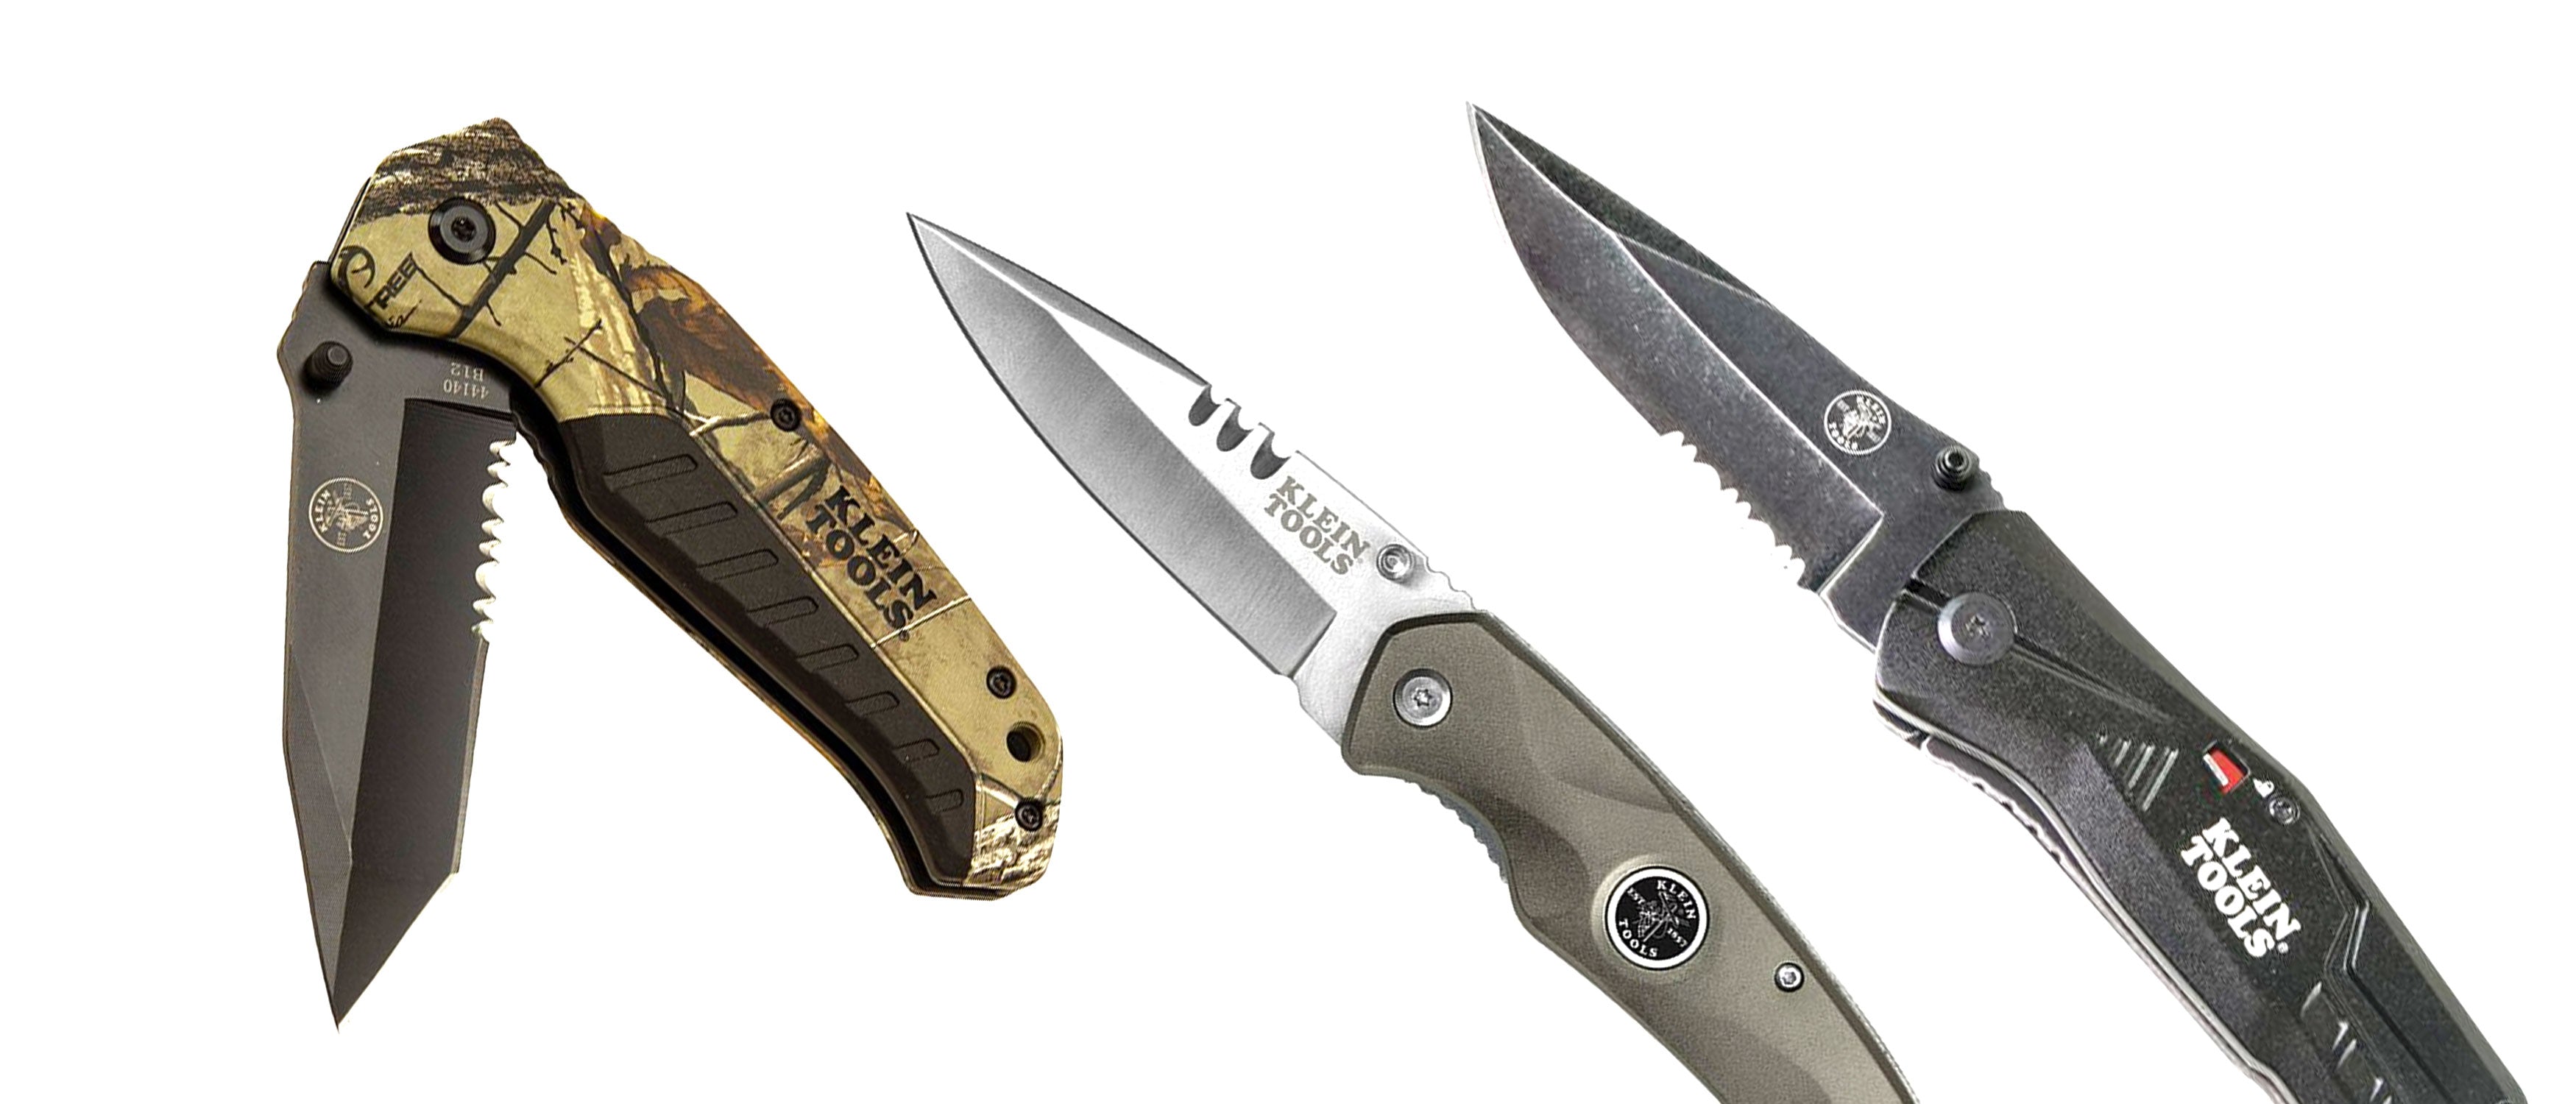 Tajima DC540N Premium Cutter Series Knife with Thumb Lock with Blade